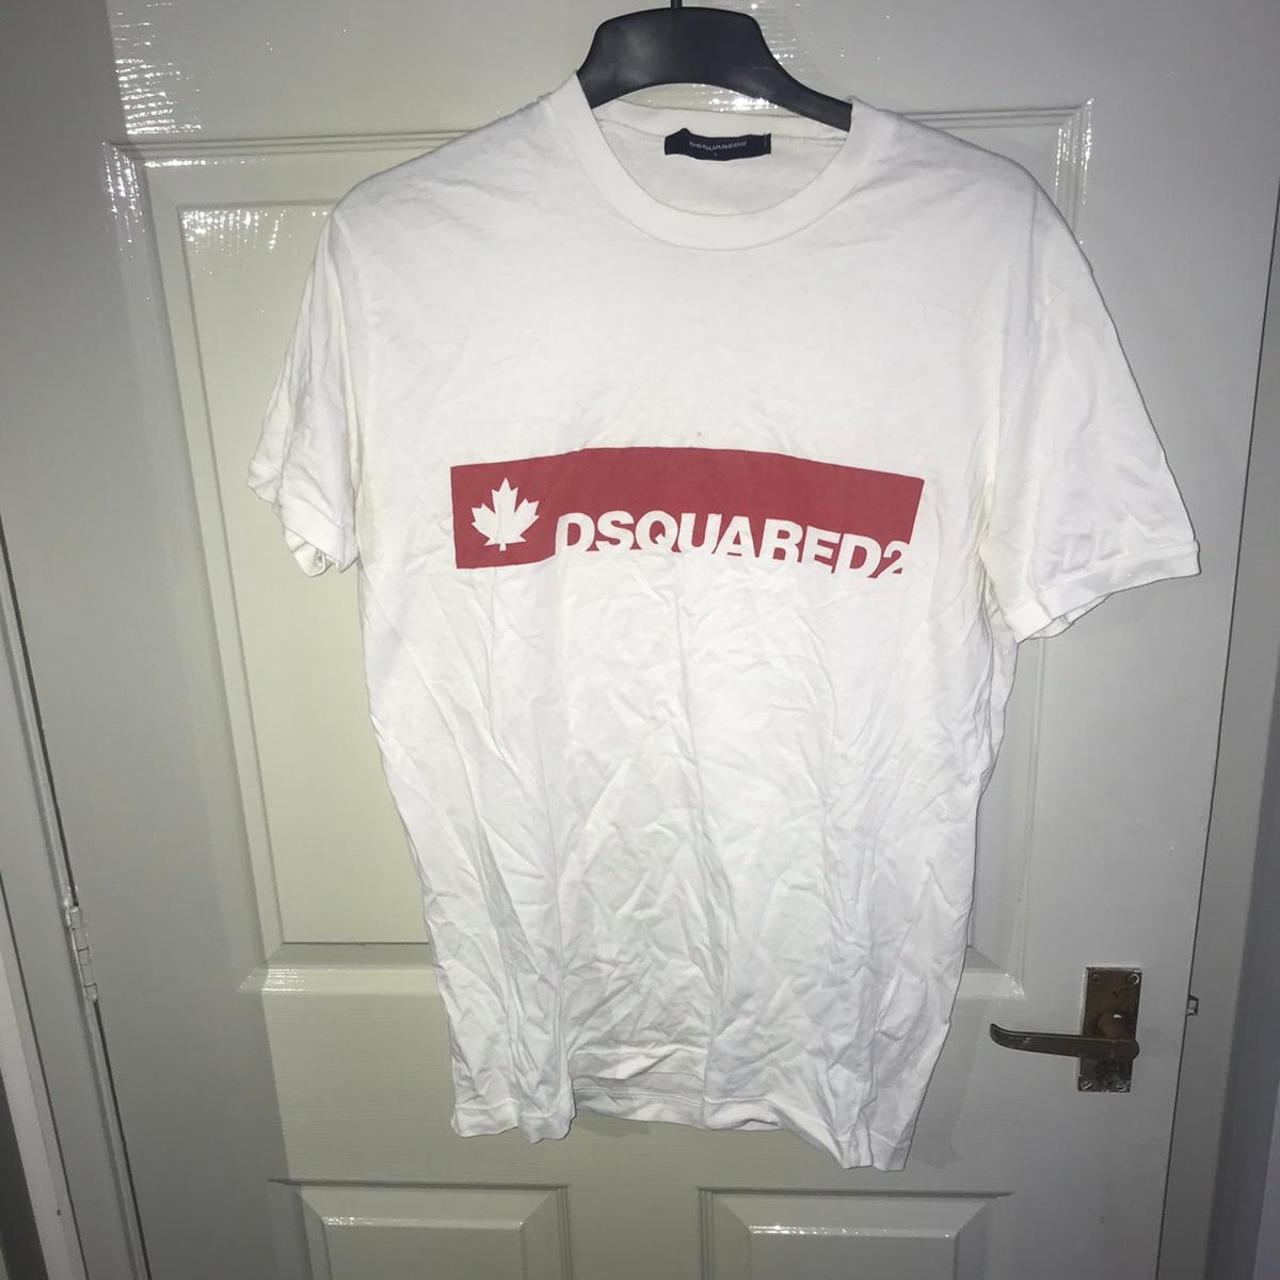 Dsquared Tshirt size large fit medium worn condition - Depop